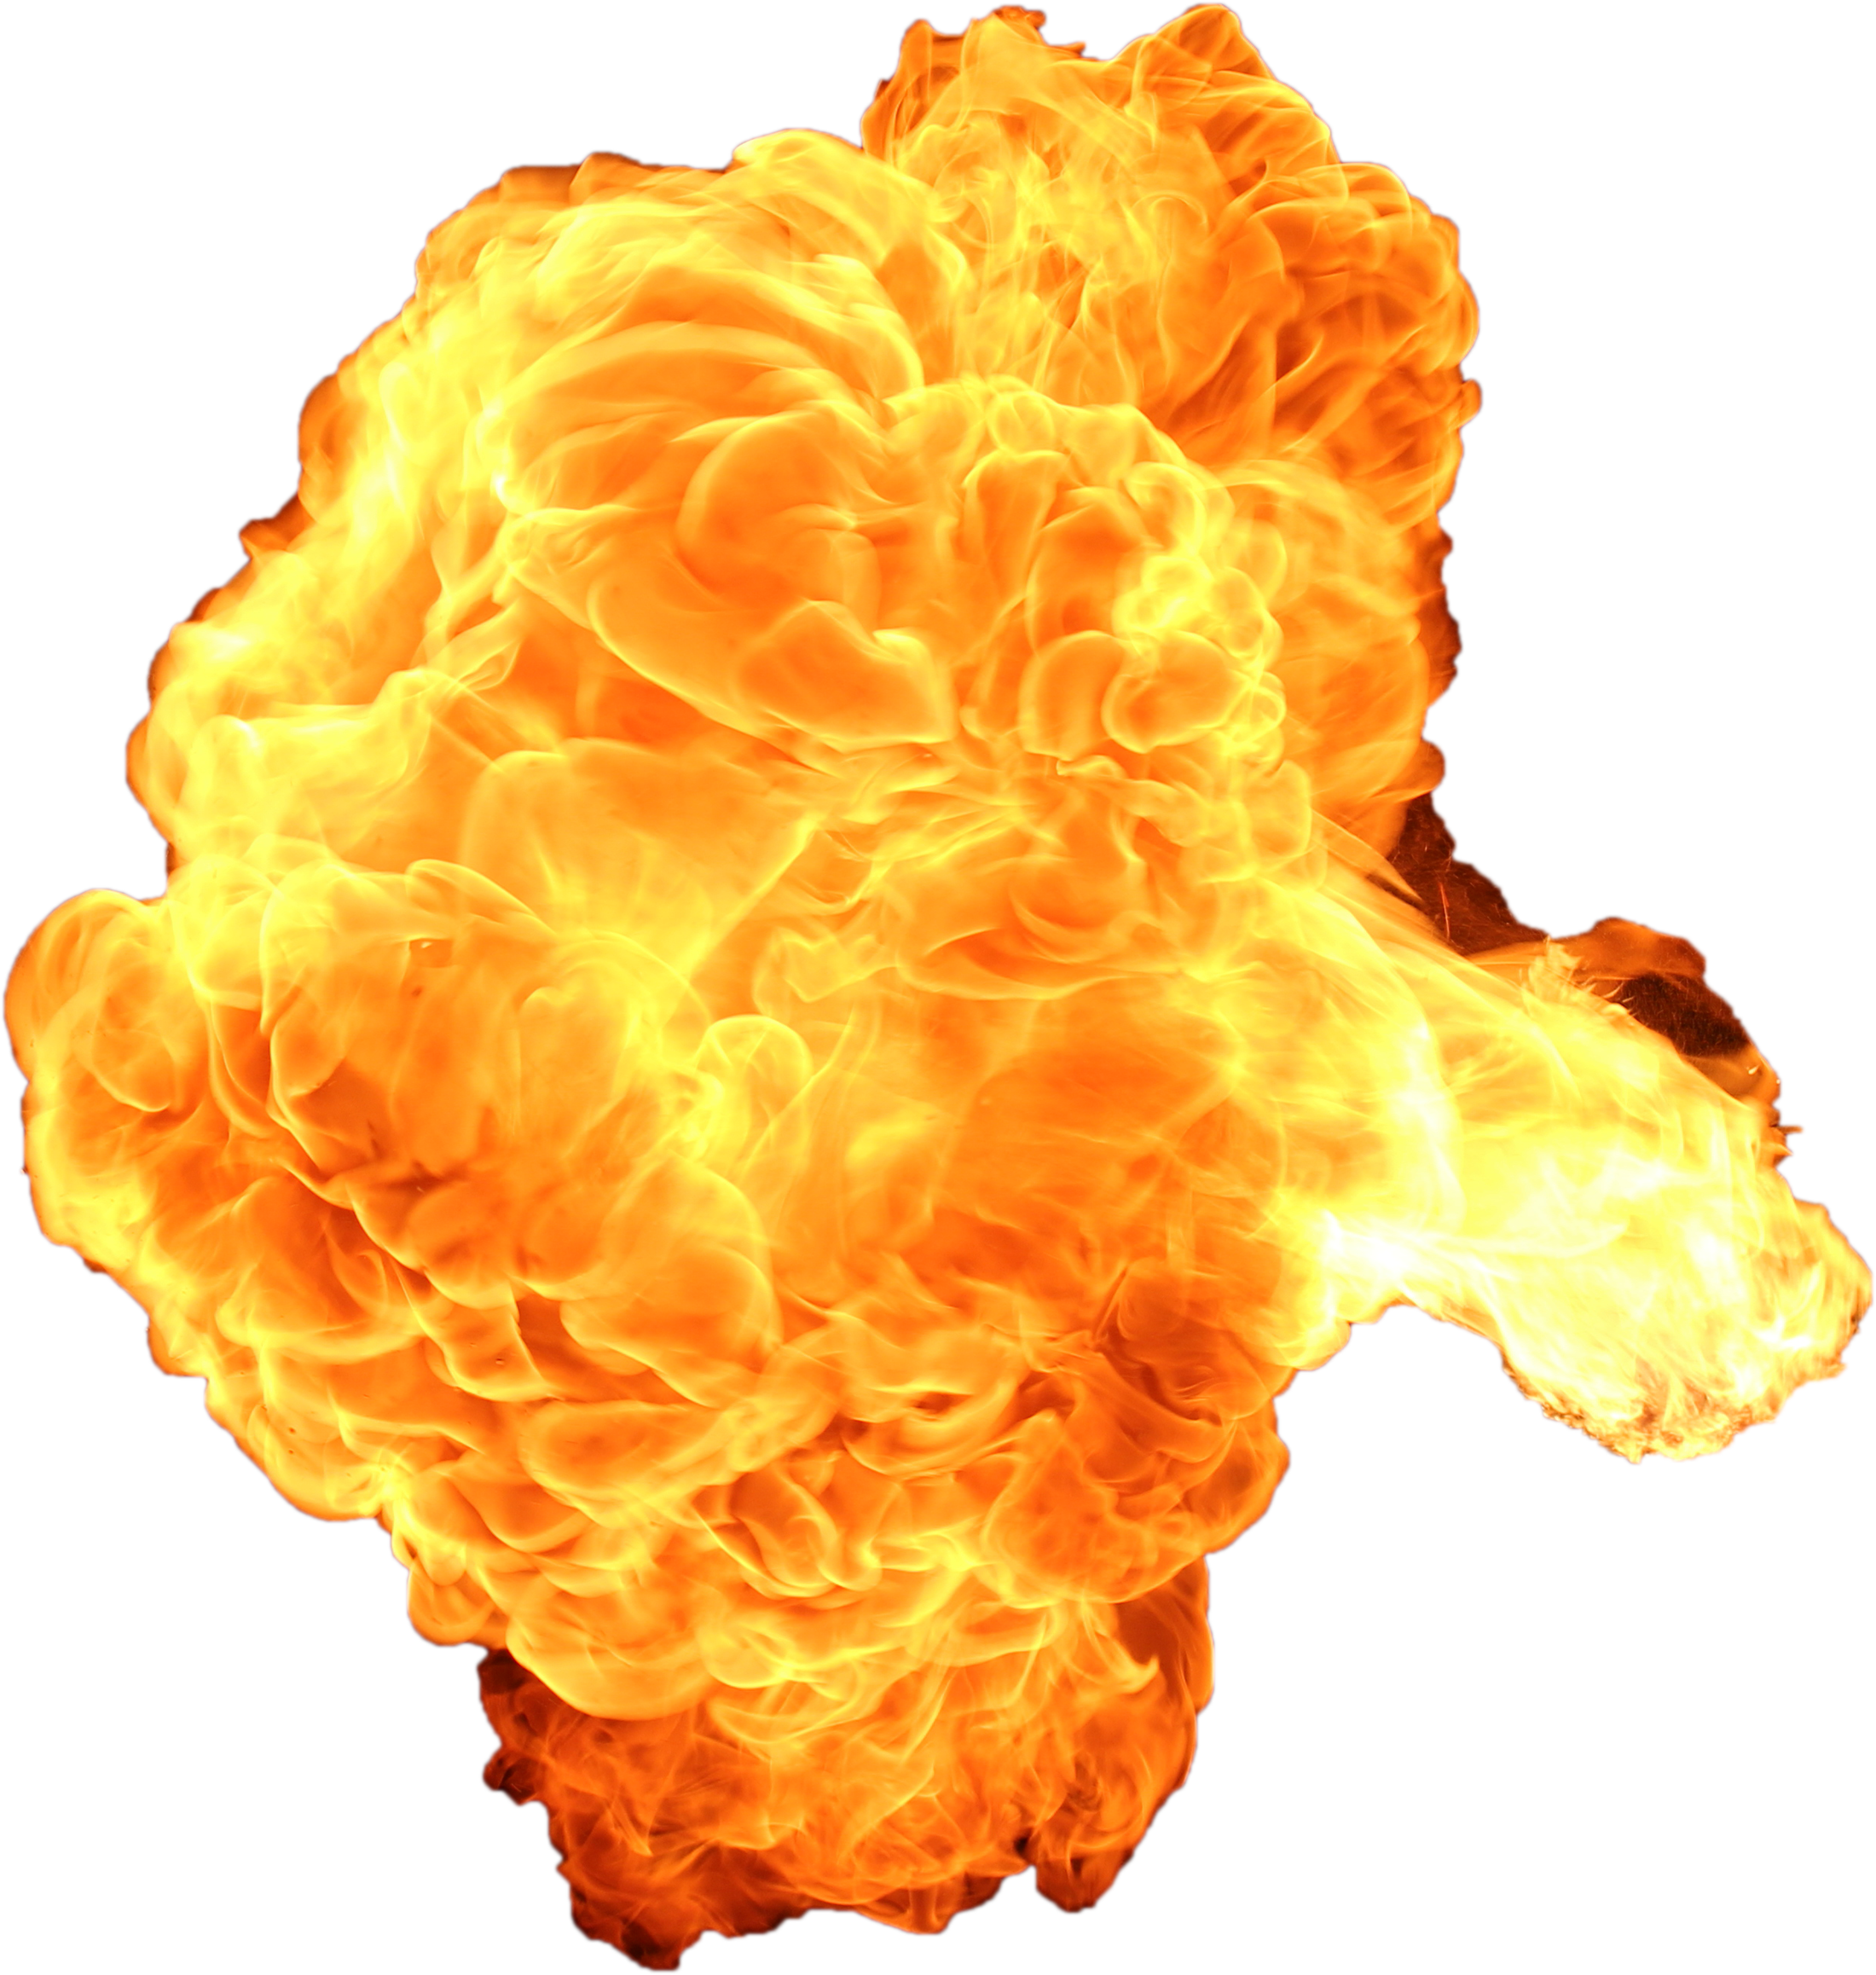 Explosion PNG transparent image download, size: 3072x2044px